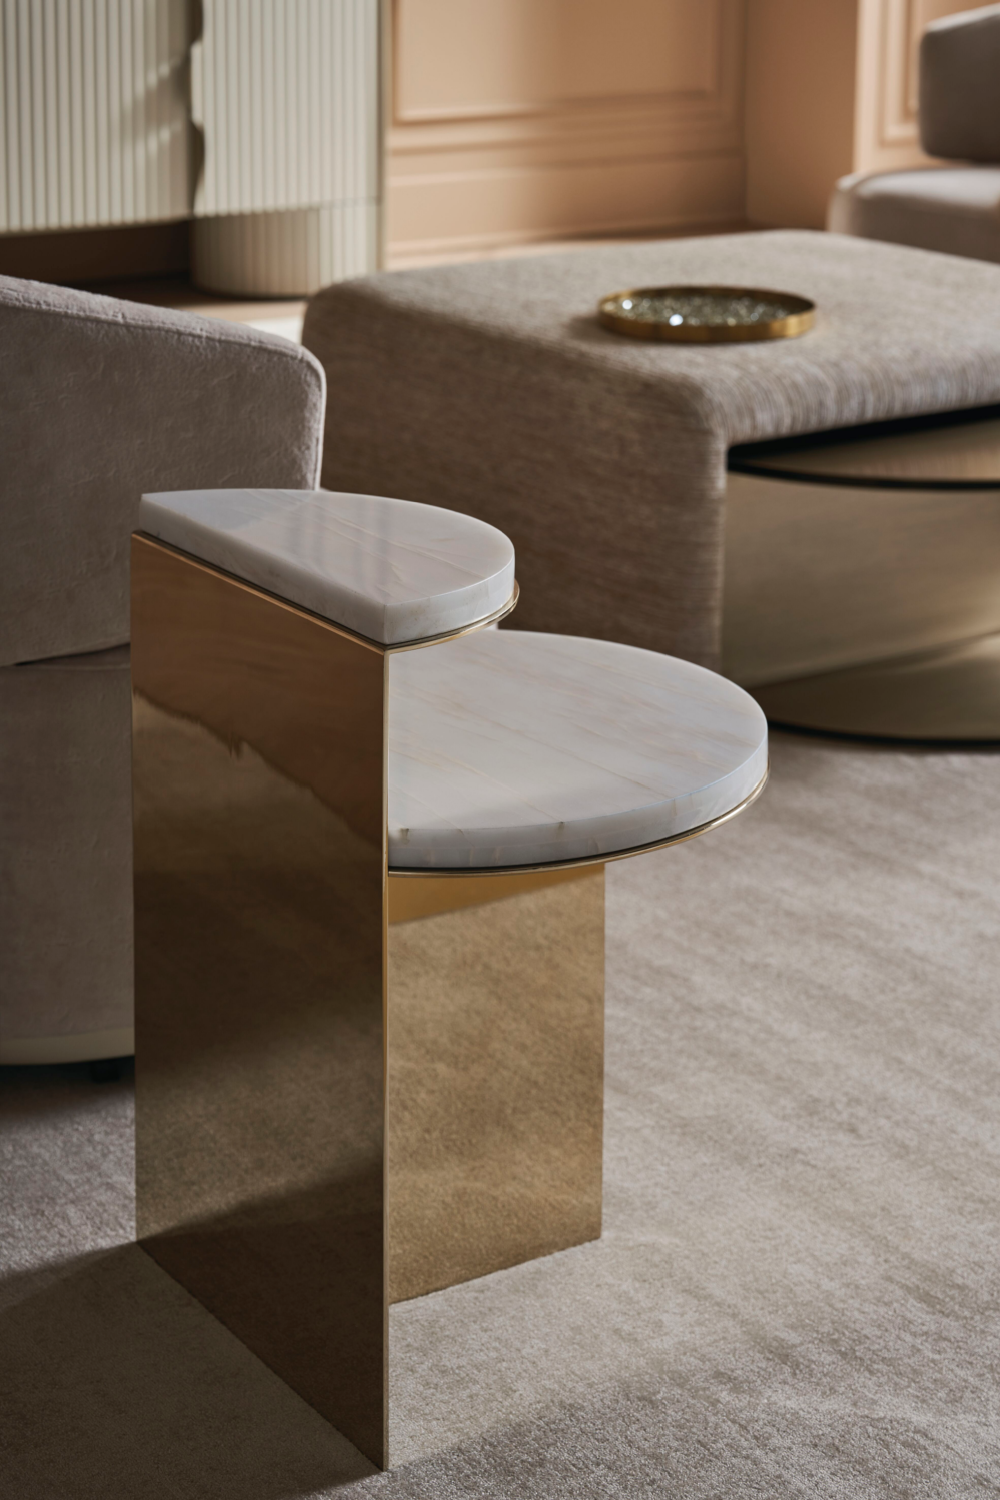 Gold Modern End Table | Caracole Touche' Light | Oroa.com